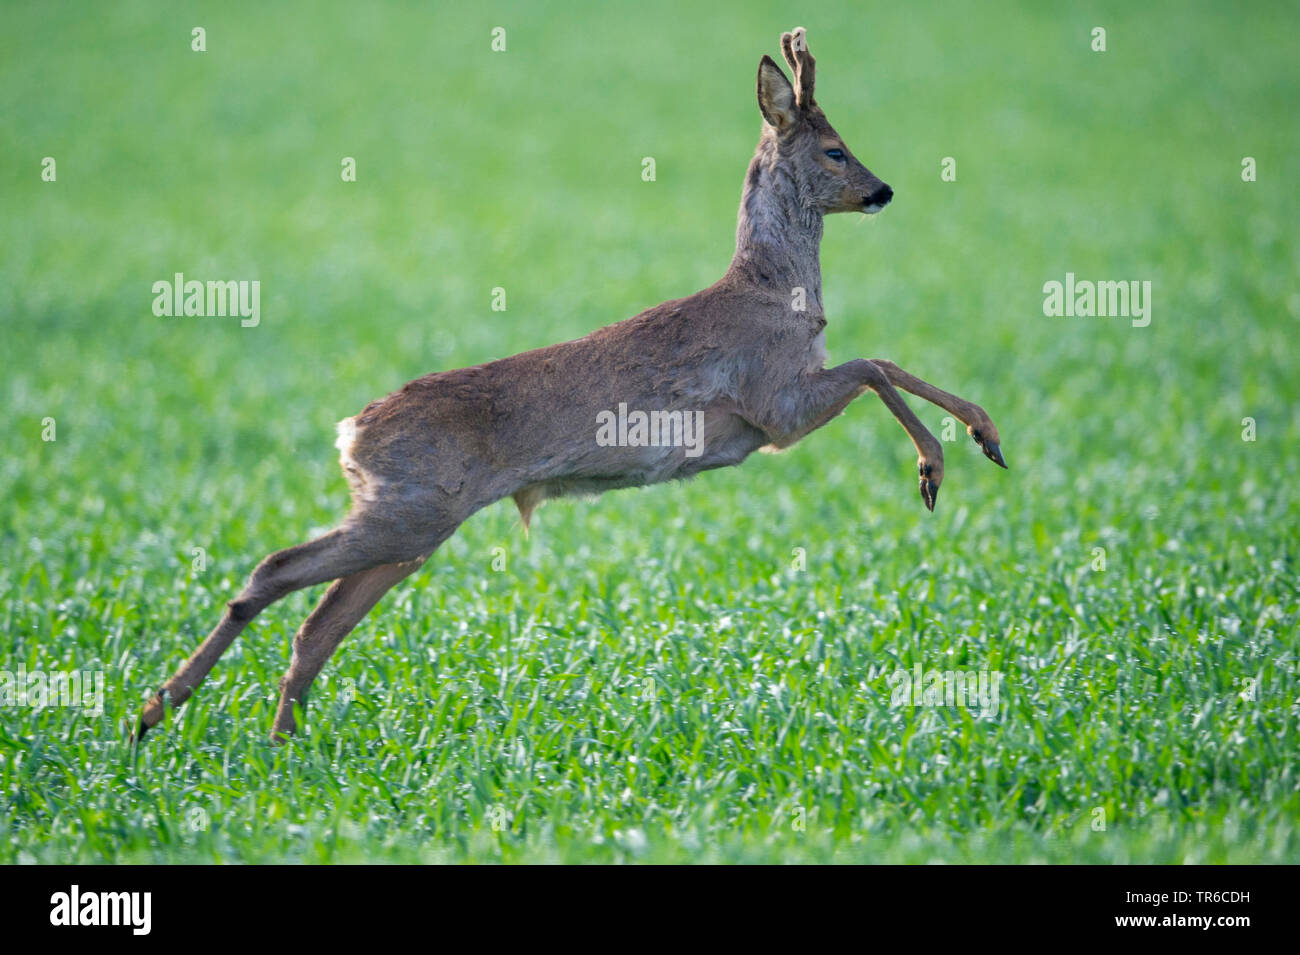 roe deer (Capreolus capreolus), boisterous young roebuck jumping, Germany, Lower Saxony Stock Photo